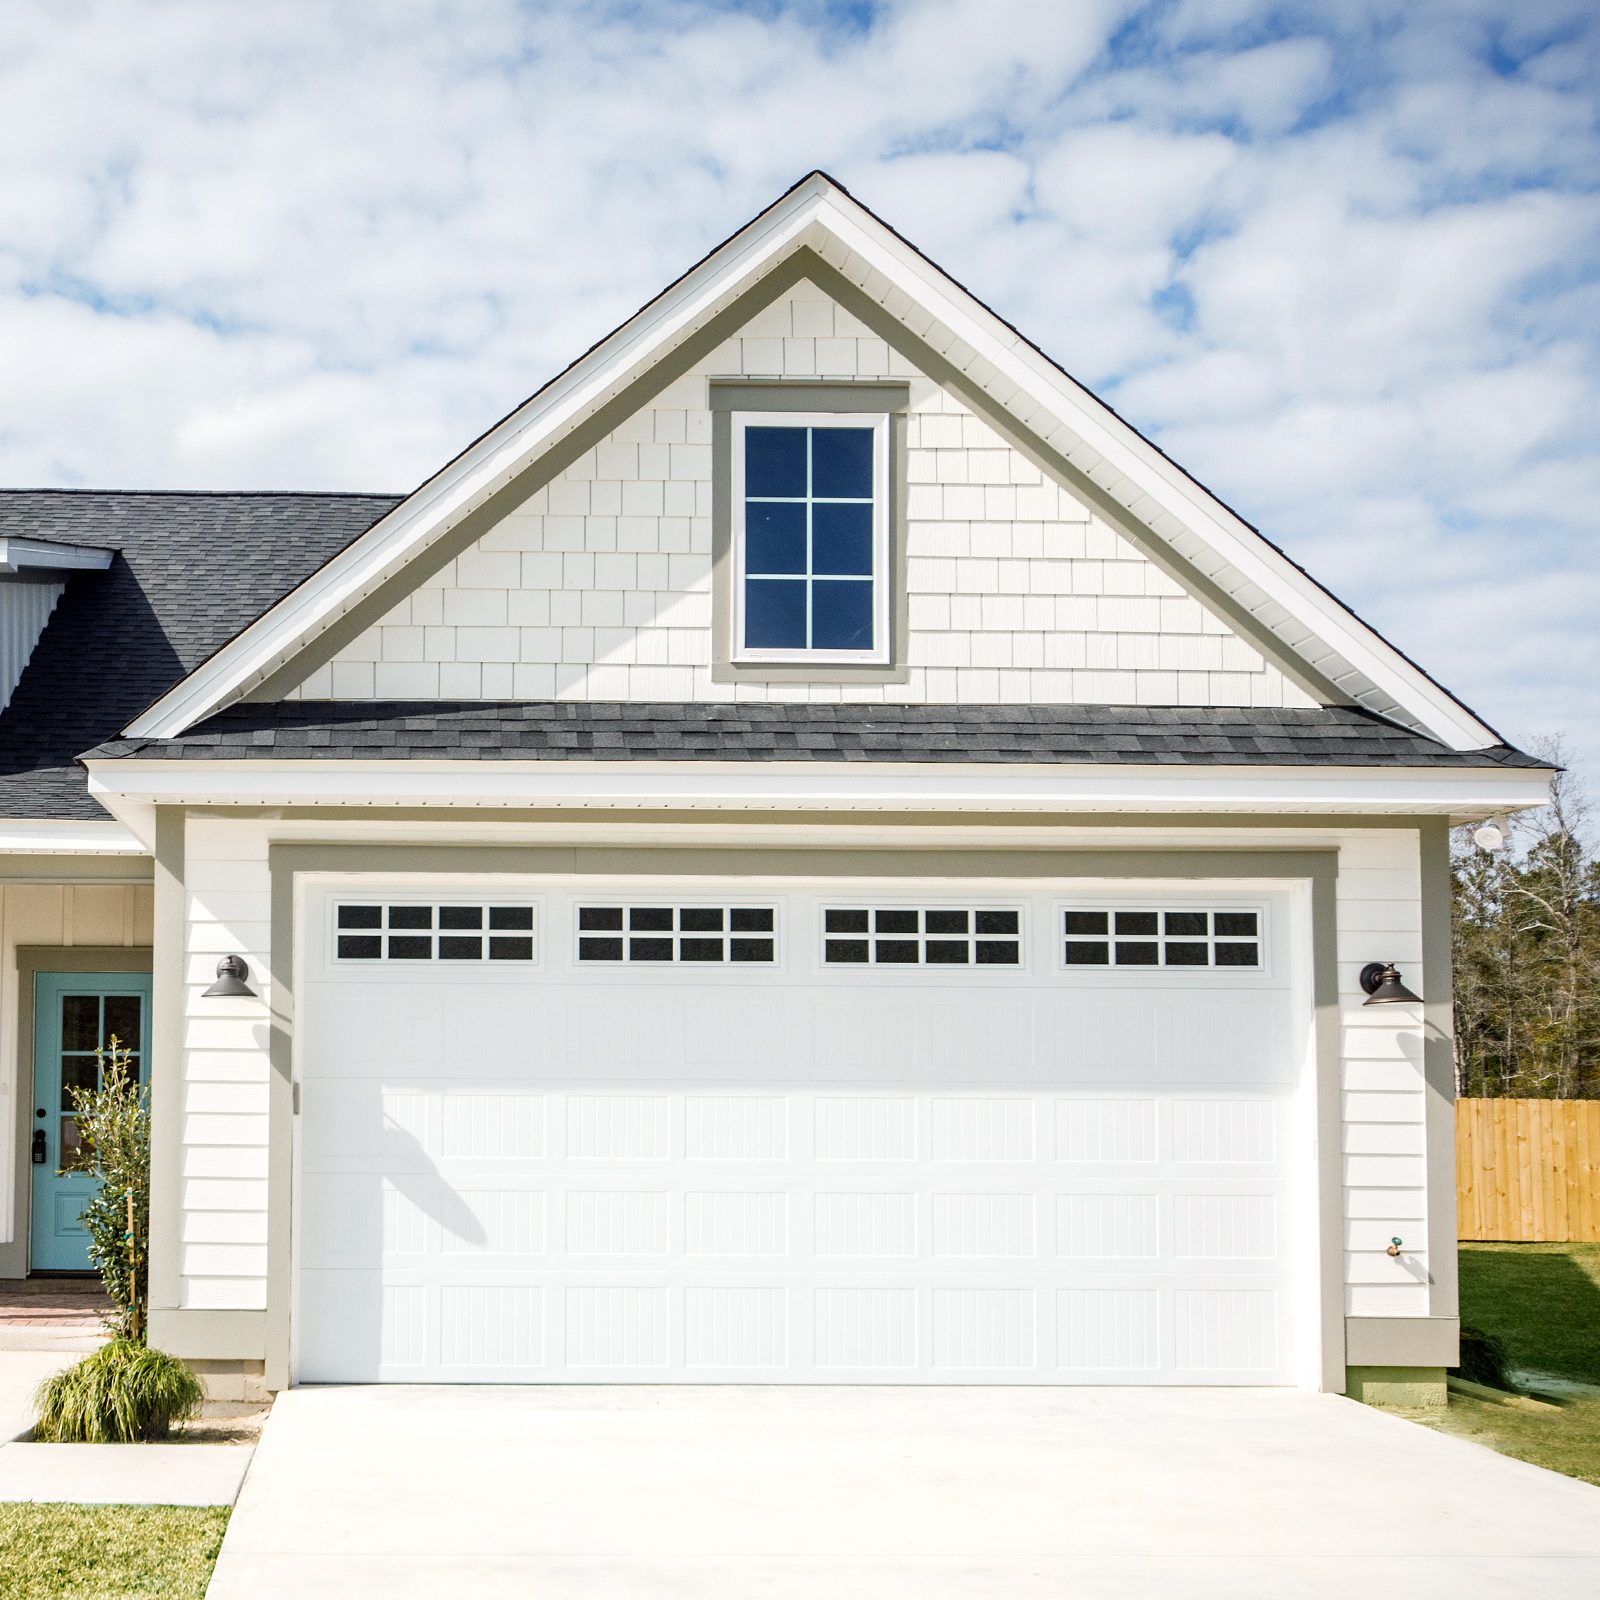 8 Tips to Keep Your Garage Door Working Flawlessly